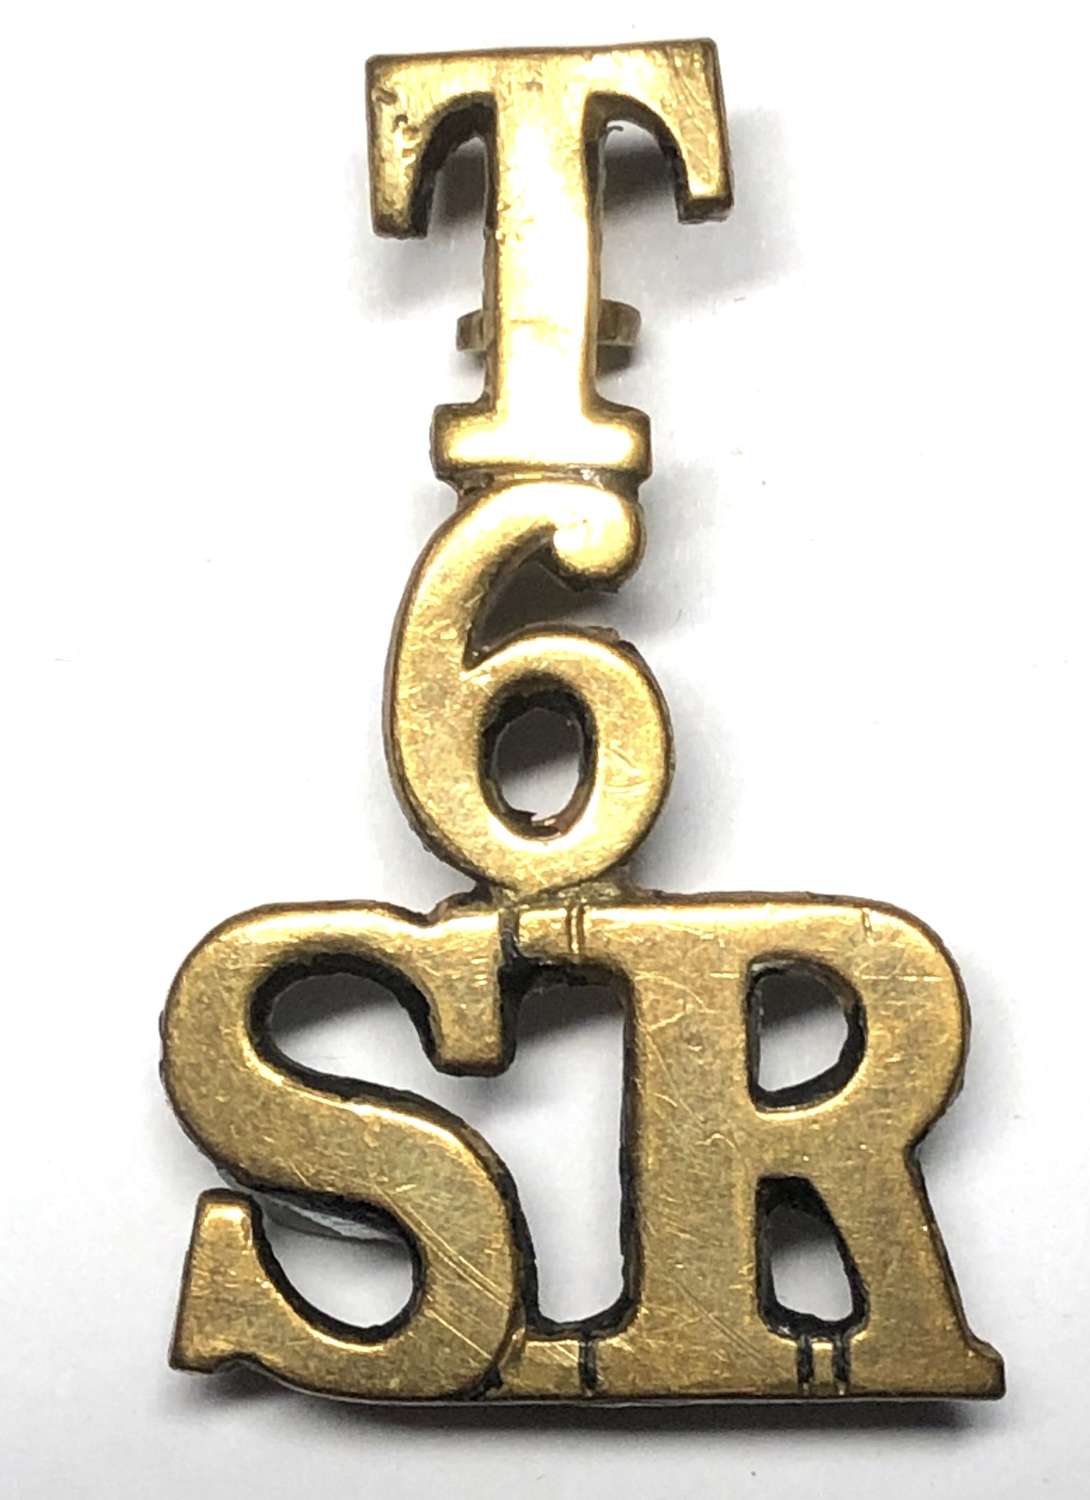 T / 6 / SR Cameronians (Scottish Rifles) shoulder title c1908-20